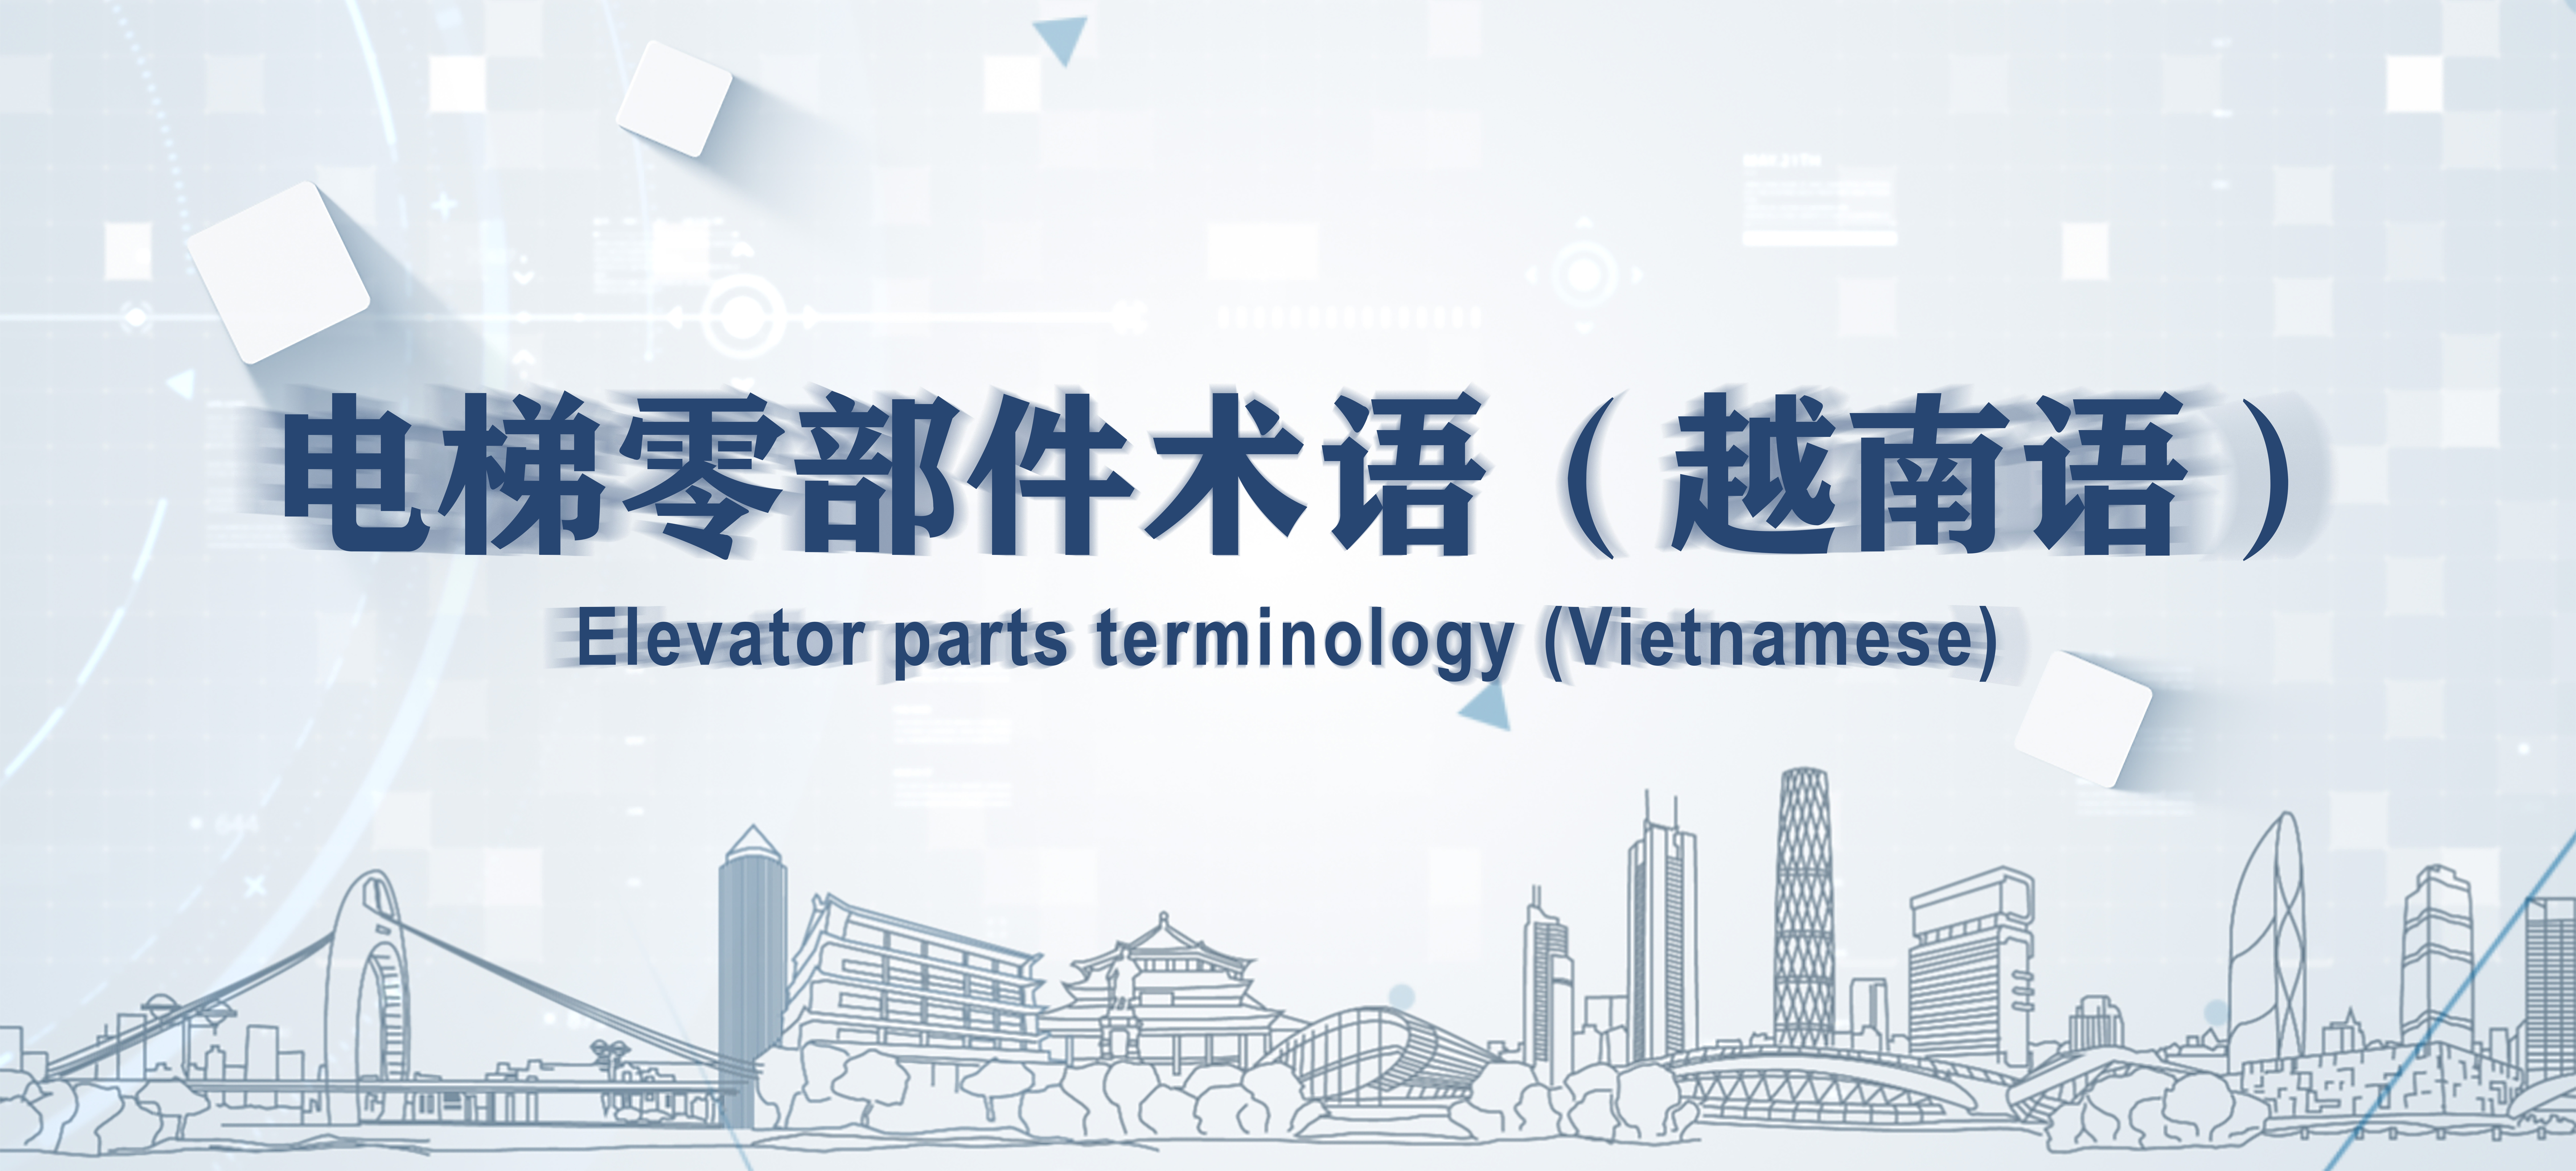 Elevator parts terminology (Vietnamese)